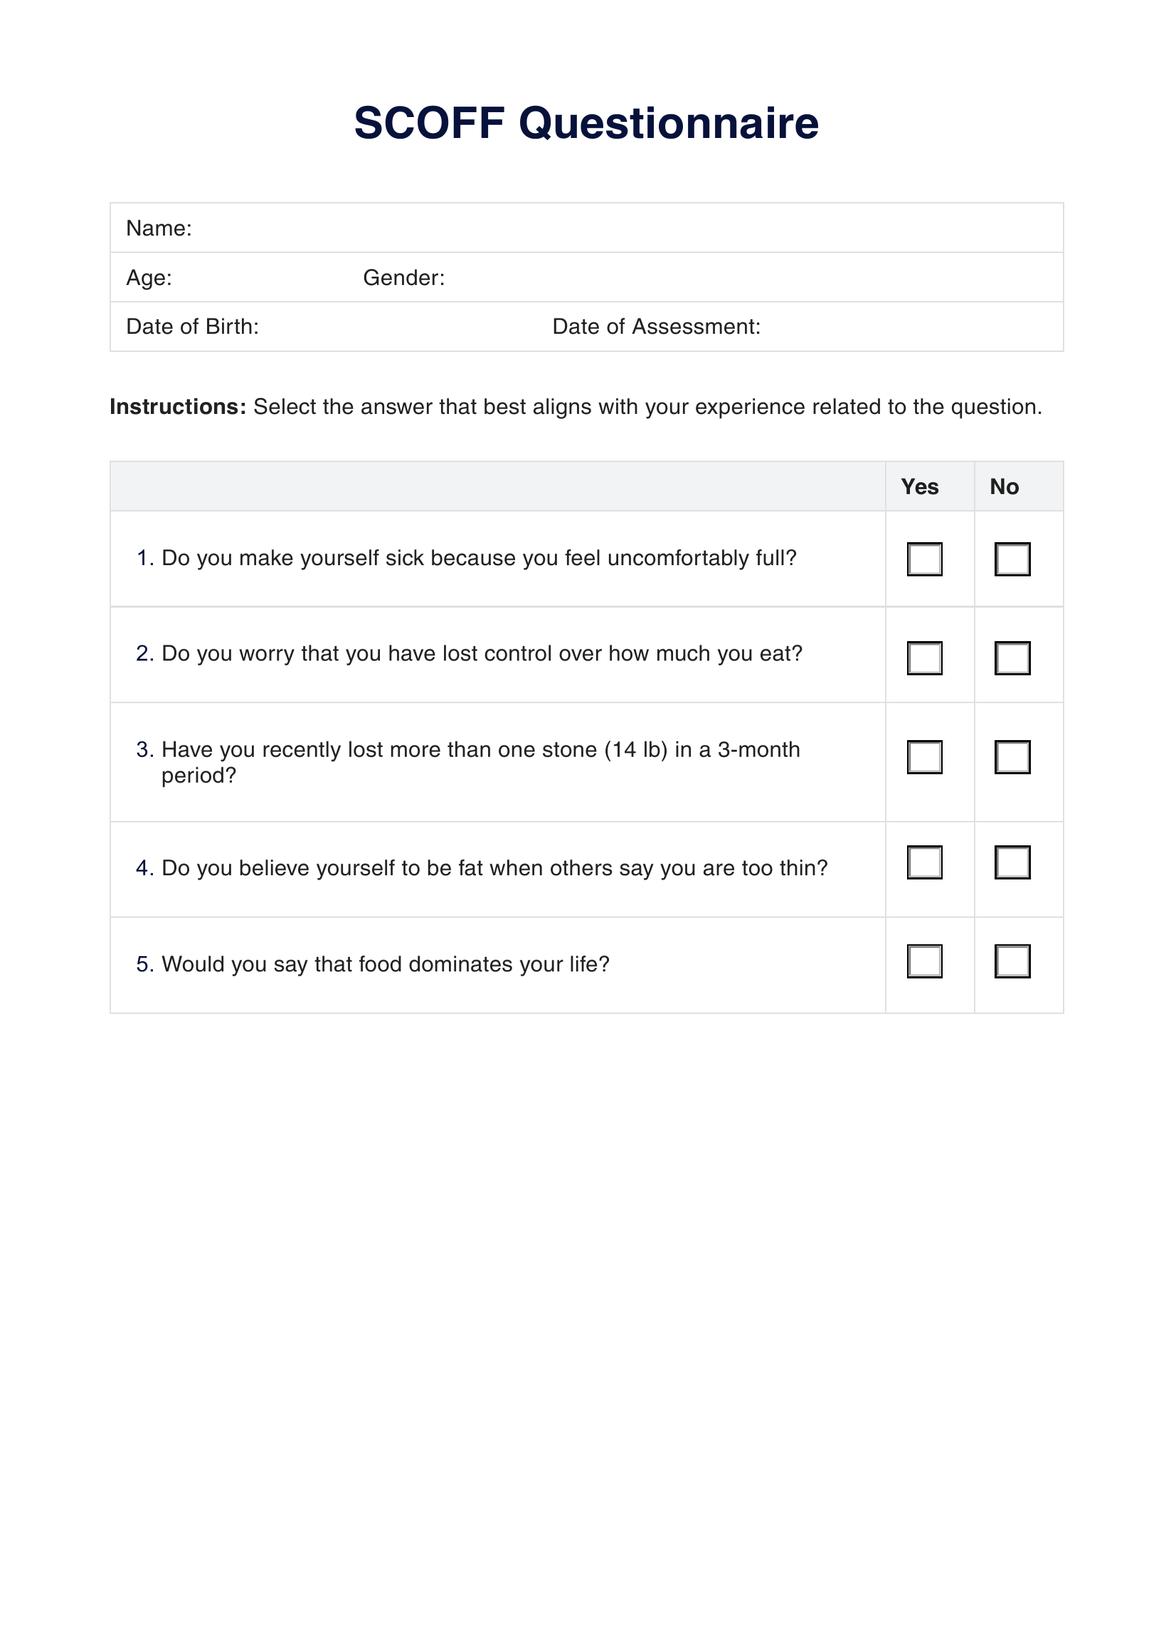 SCOFF Questionnaire PDF Example